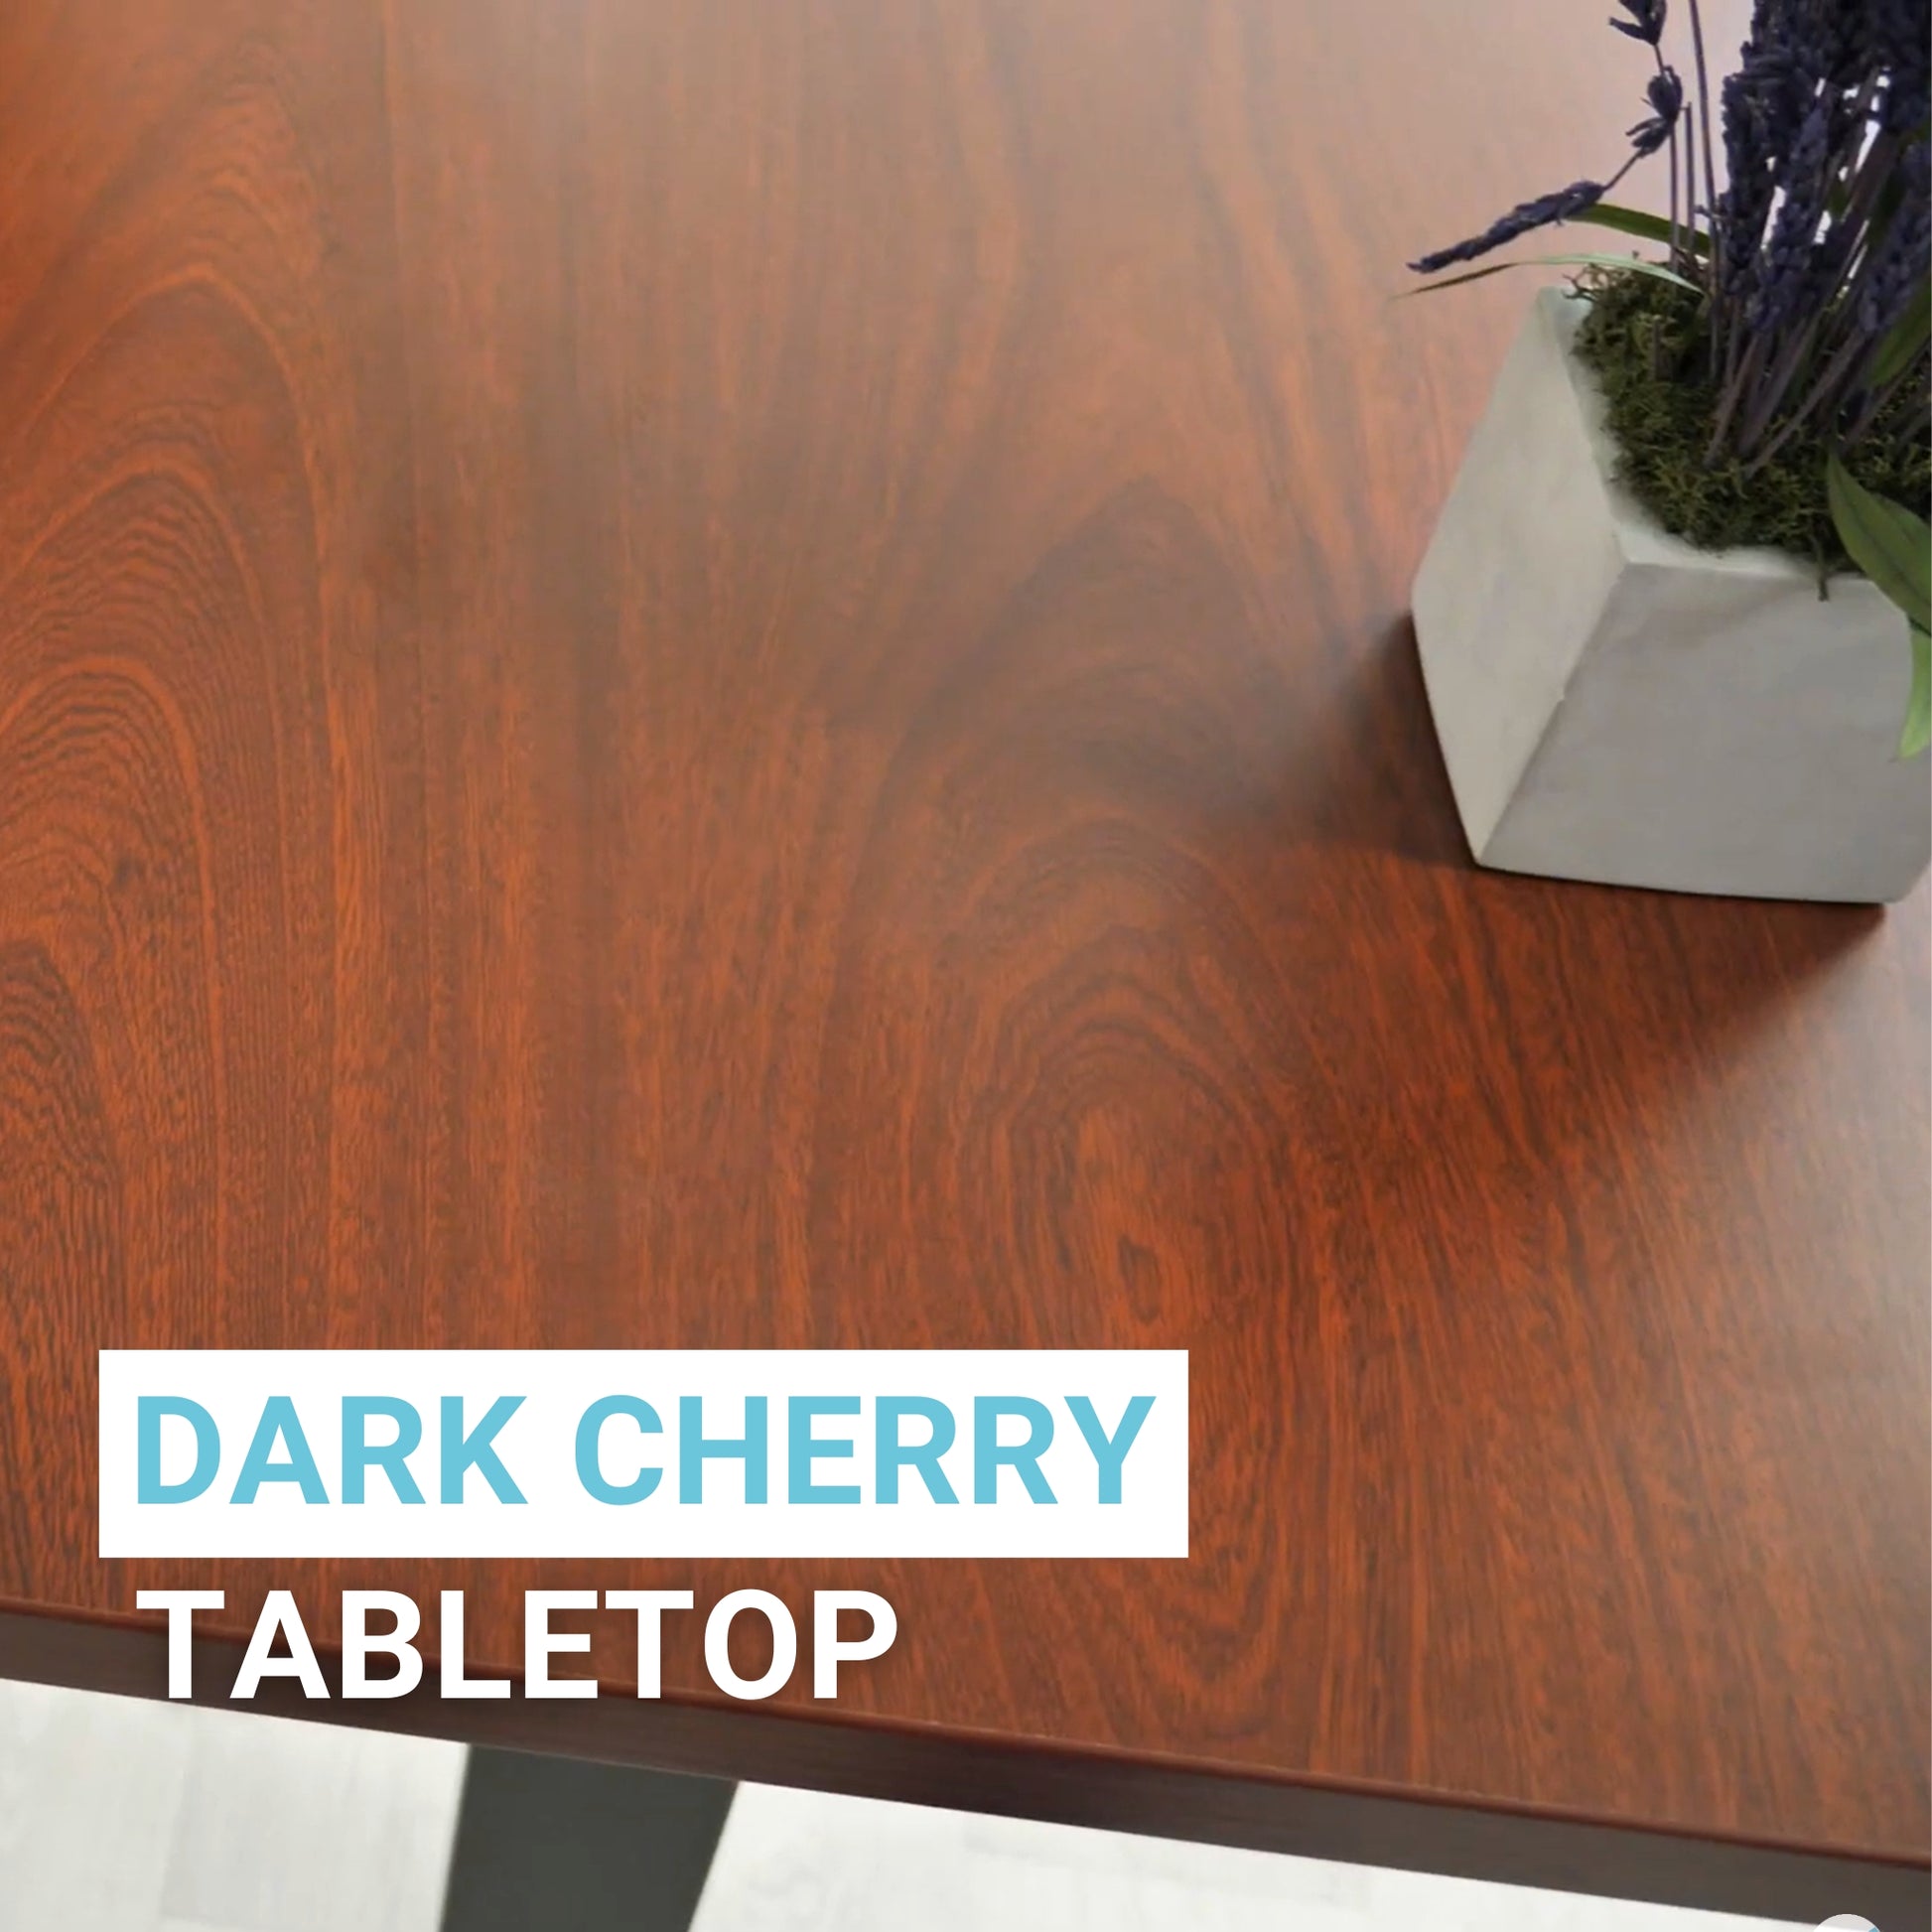 Dark Cherry Tabletop